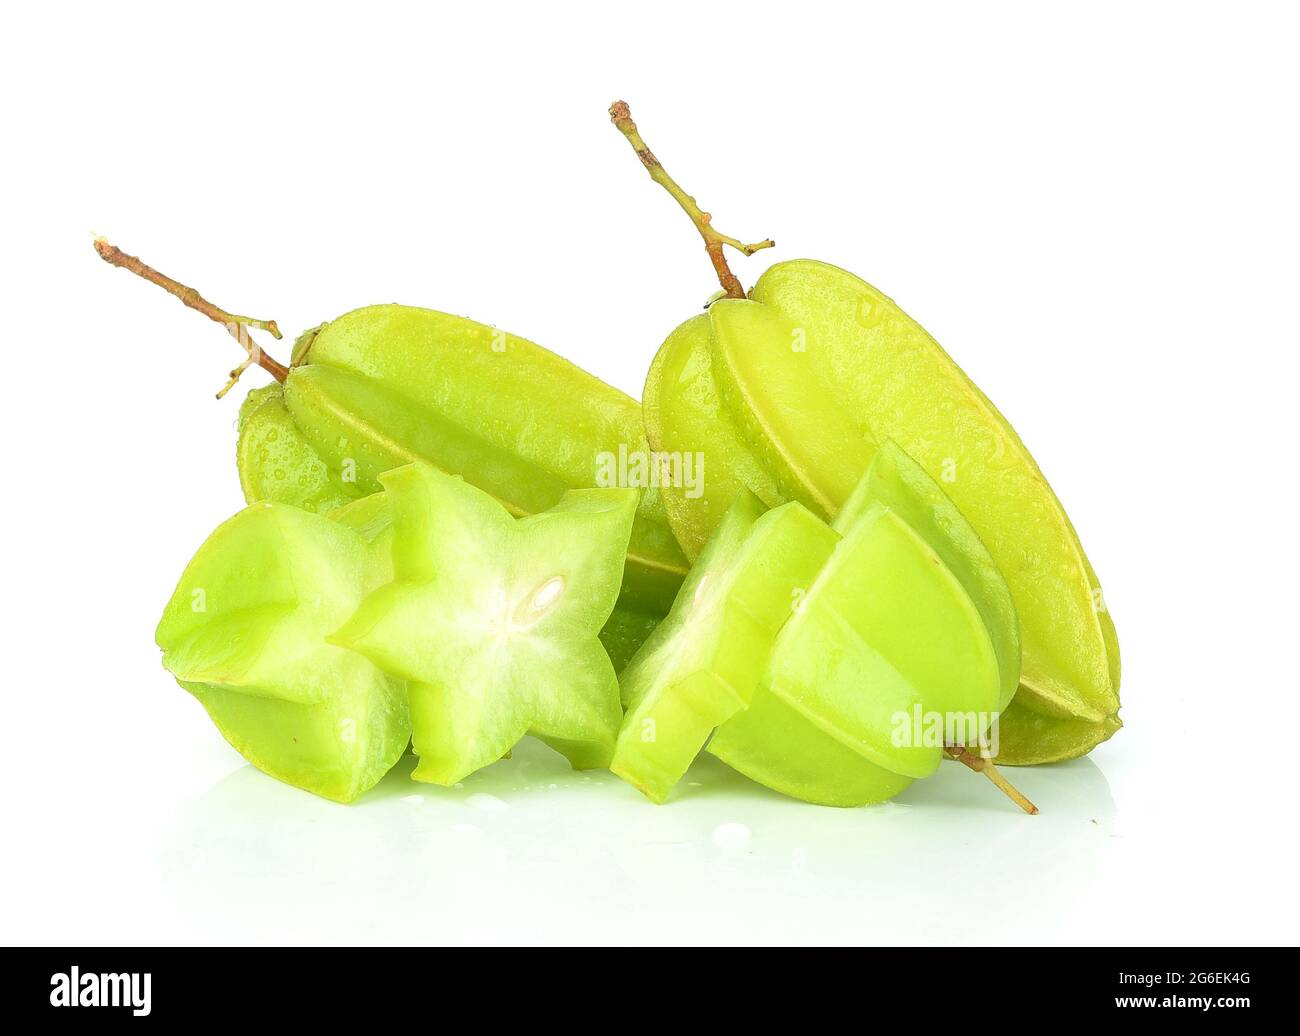 Star apple isolated on white background Stock Photo